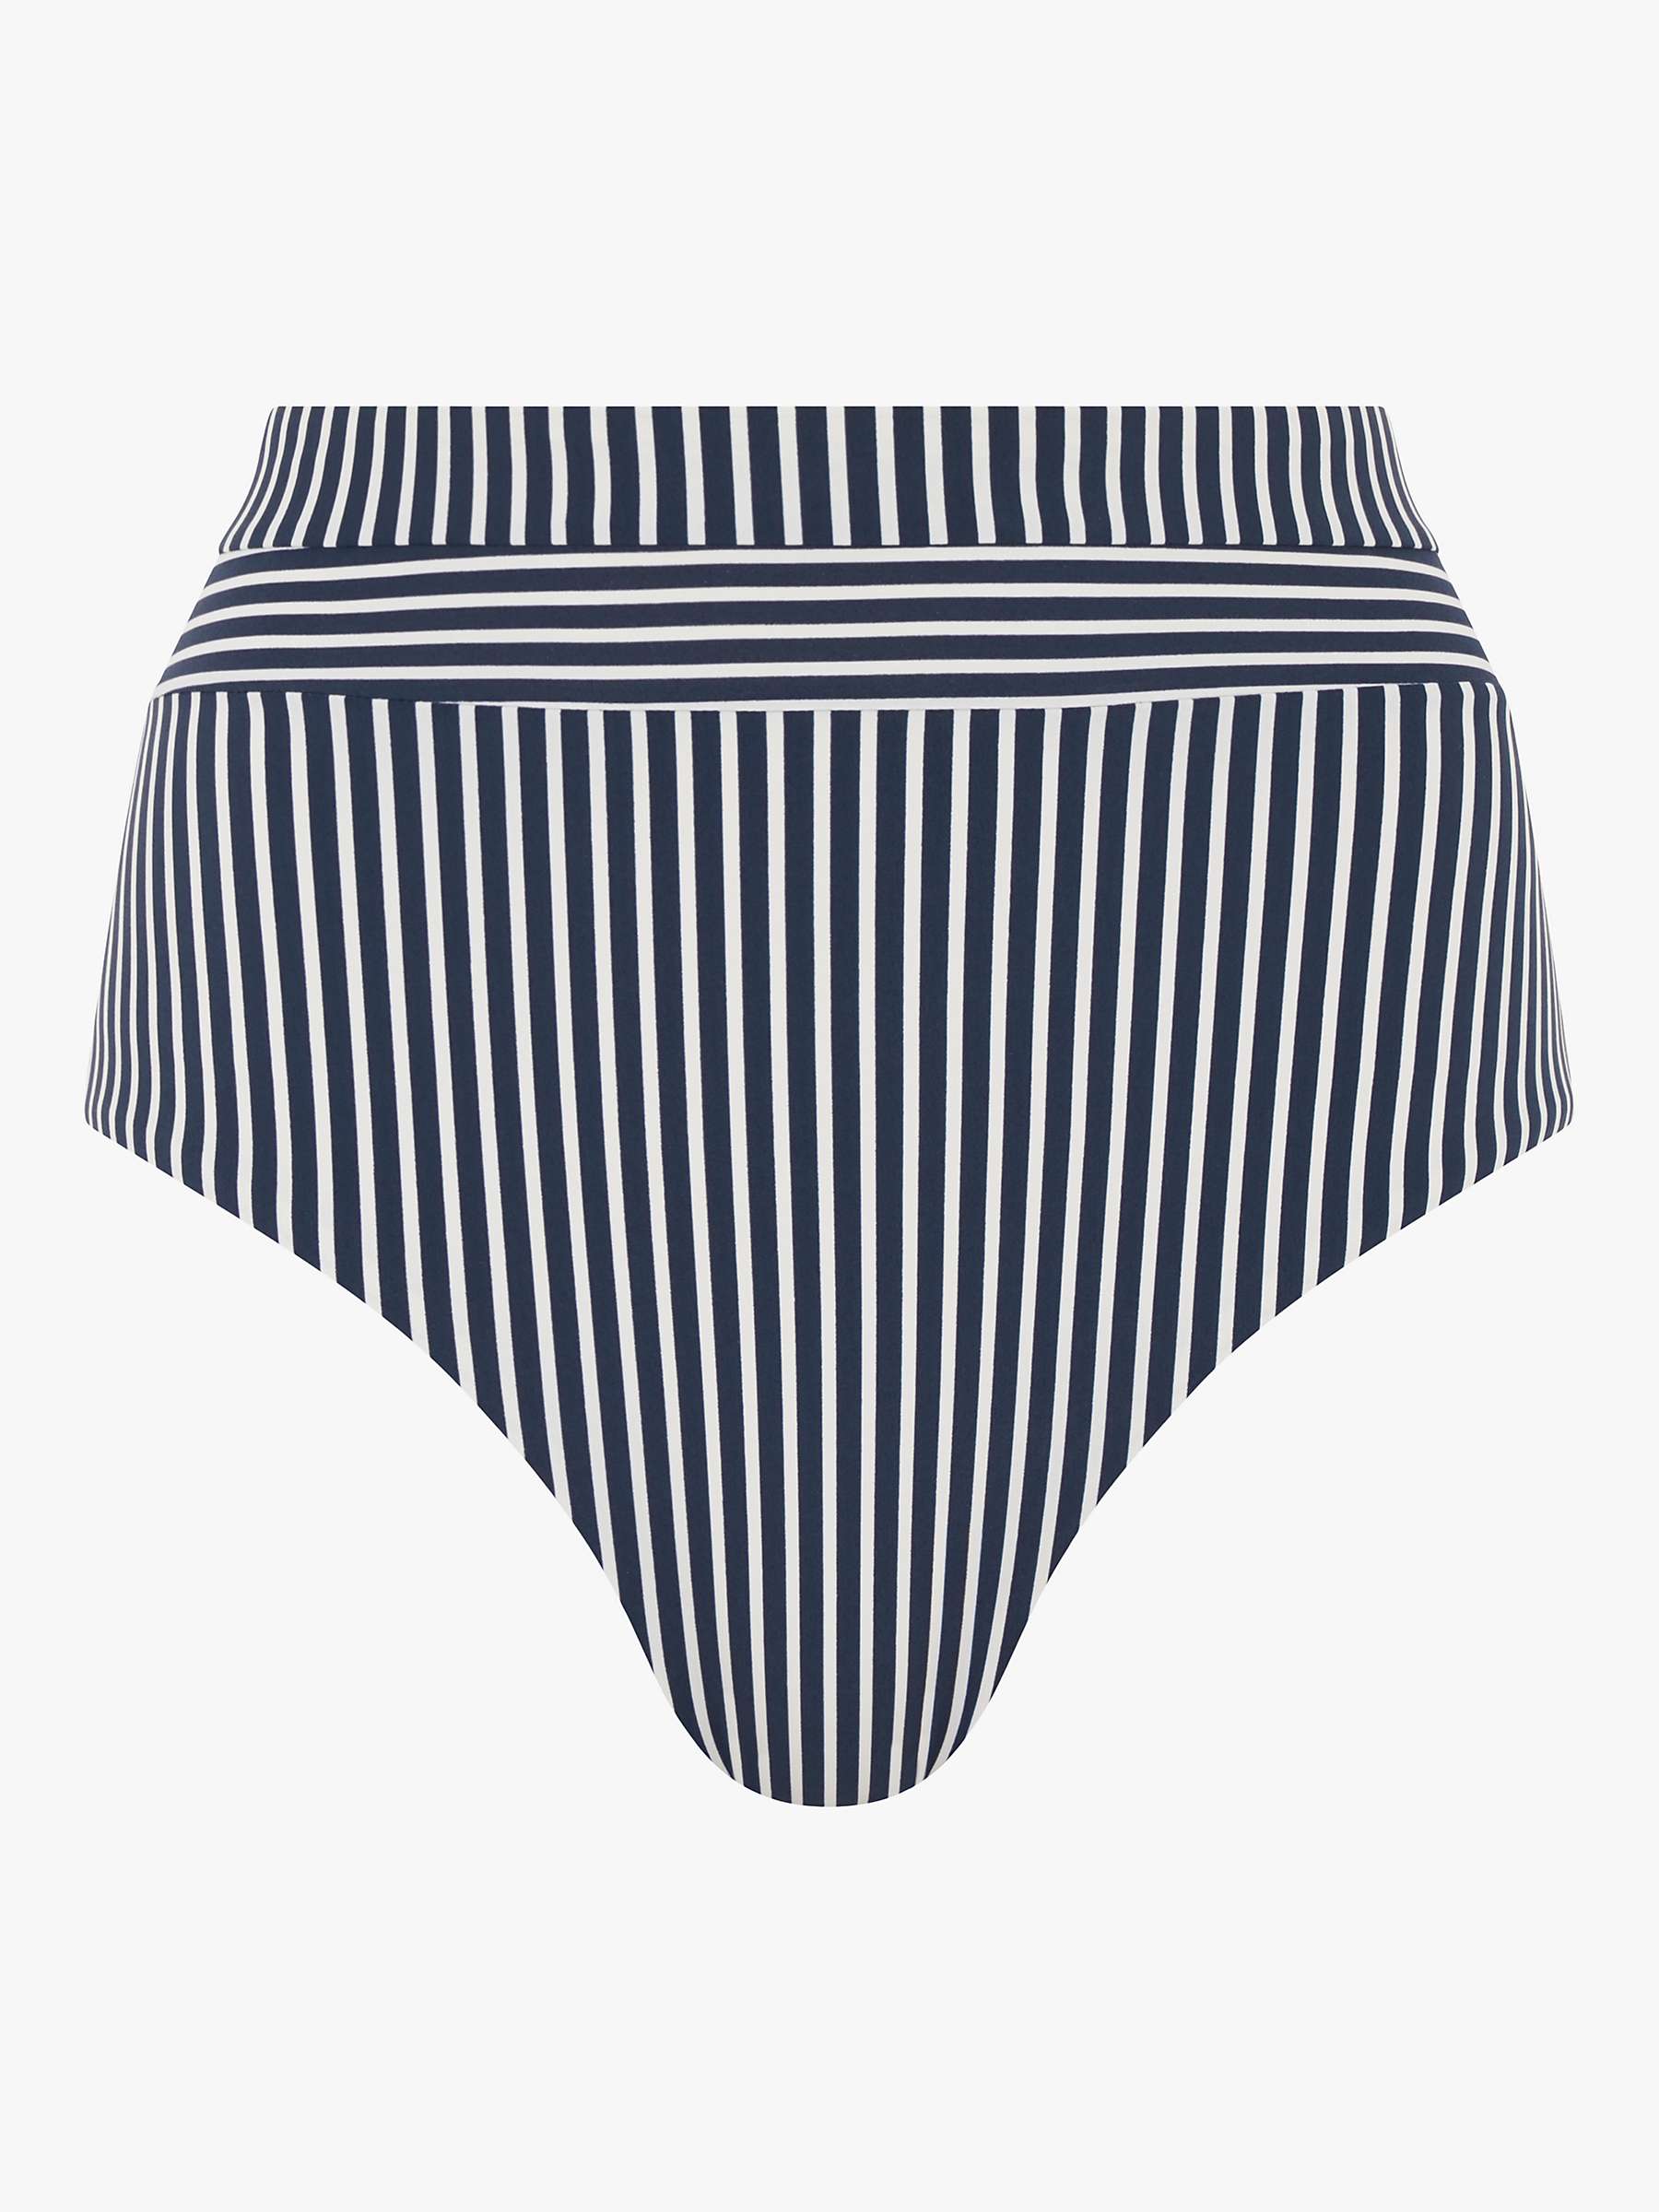 Femilet Murano High Waist Bikini Bottoms, Dark Stripes at John Lewis ...